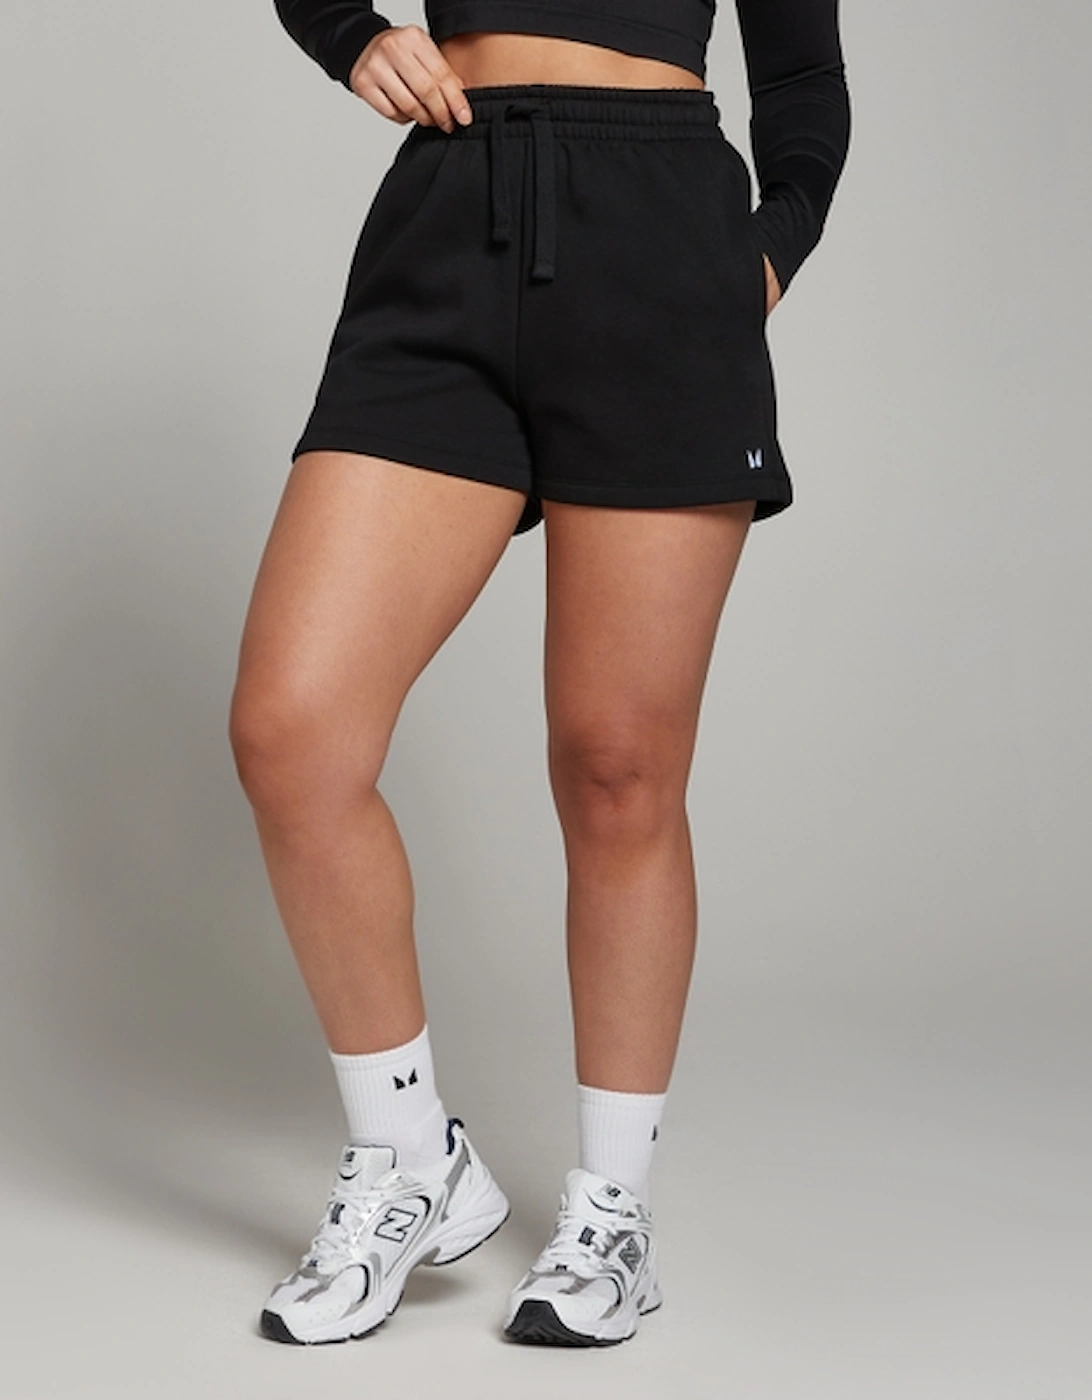 Women's Basics Shorts - Black, 2 of 1